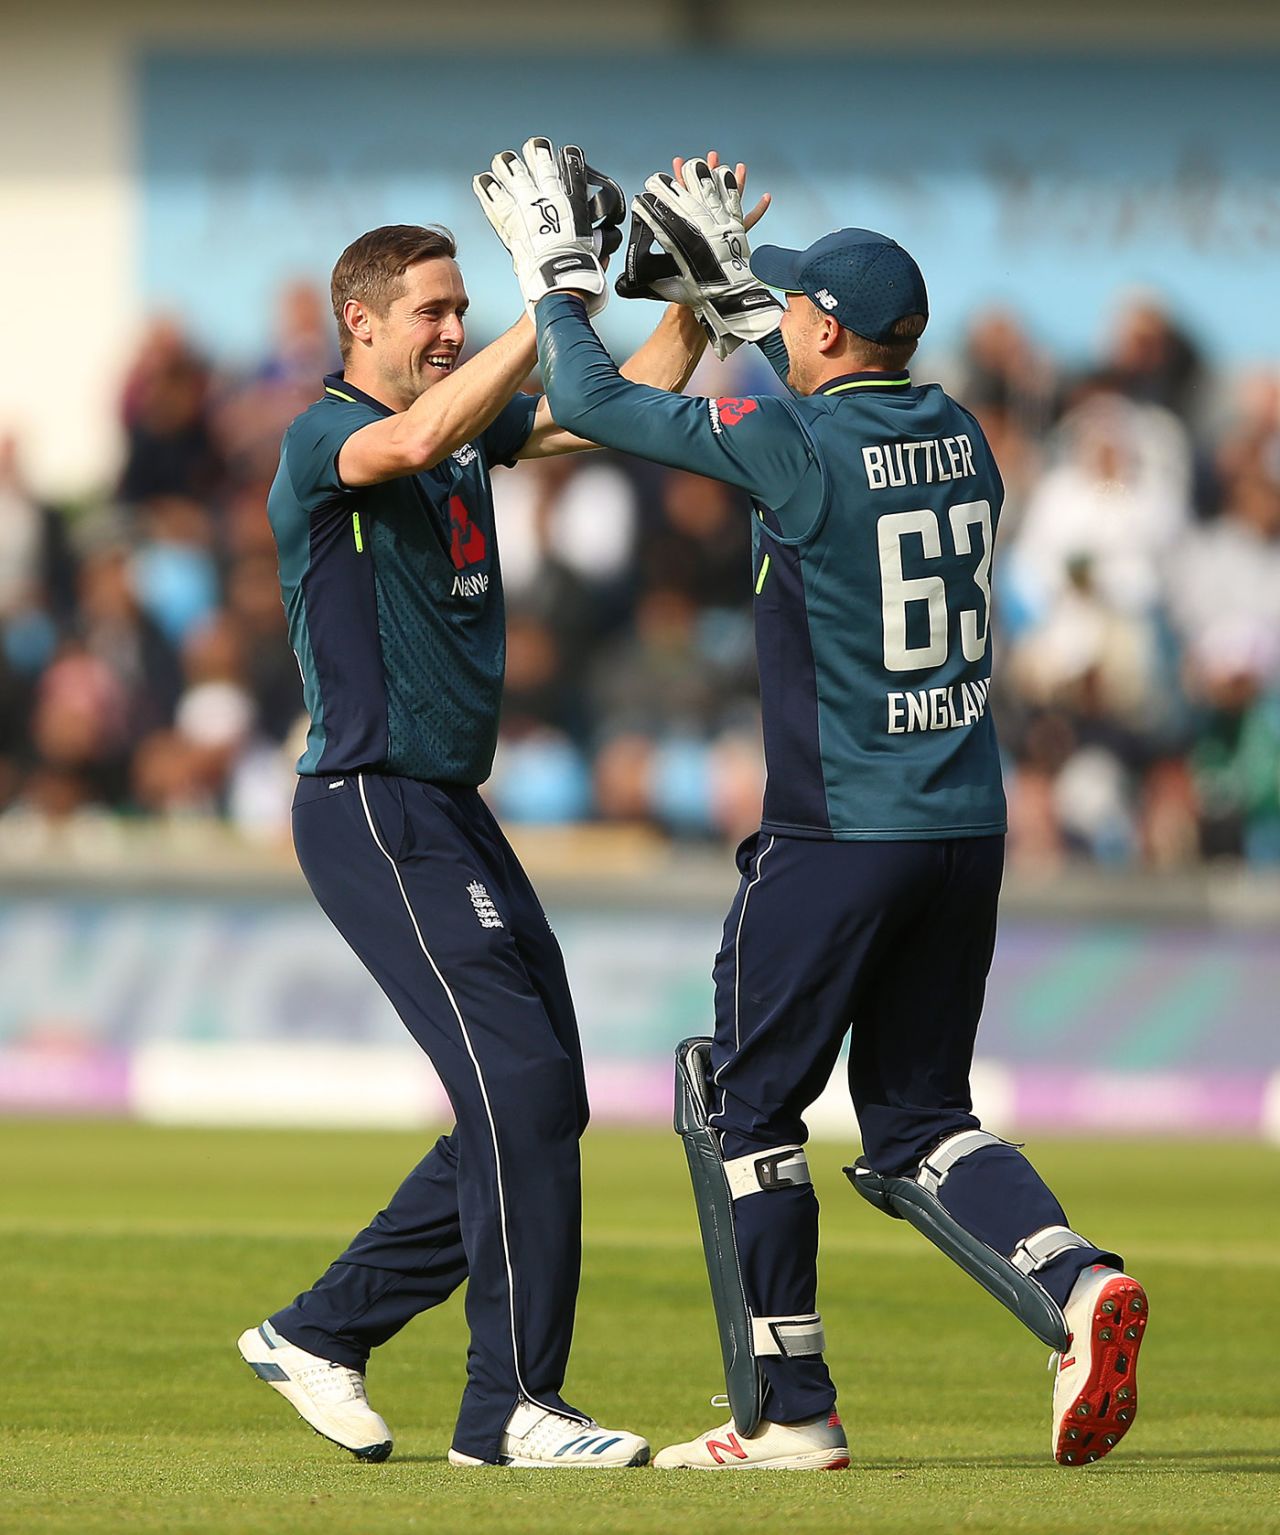 Chris Woakes claimed a five-wicket haul, England v Pakistan, 5th ODI, Headingley, May 19, 2019